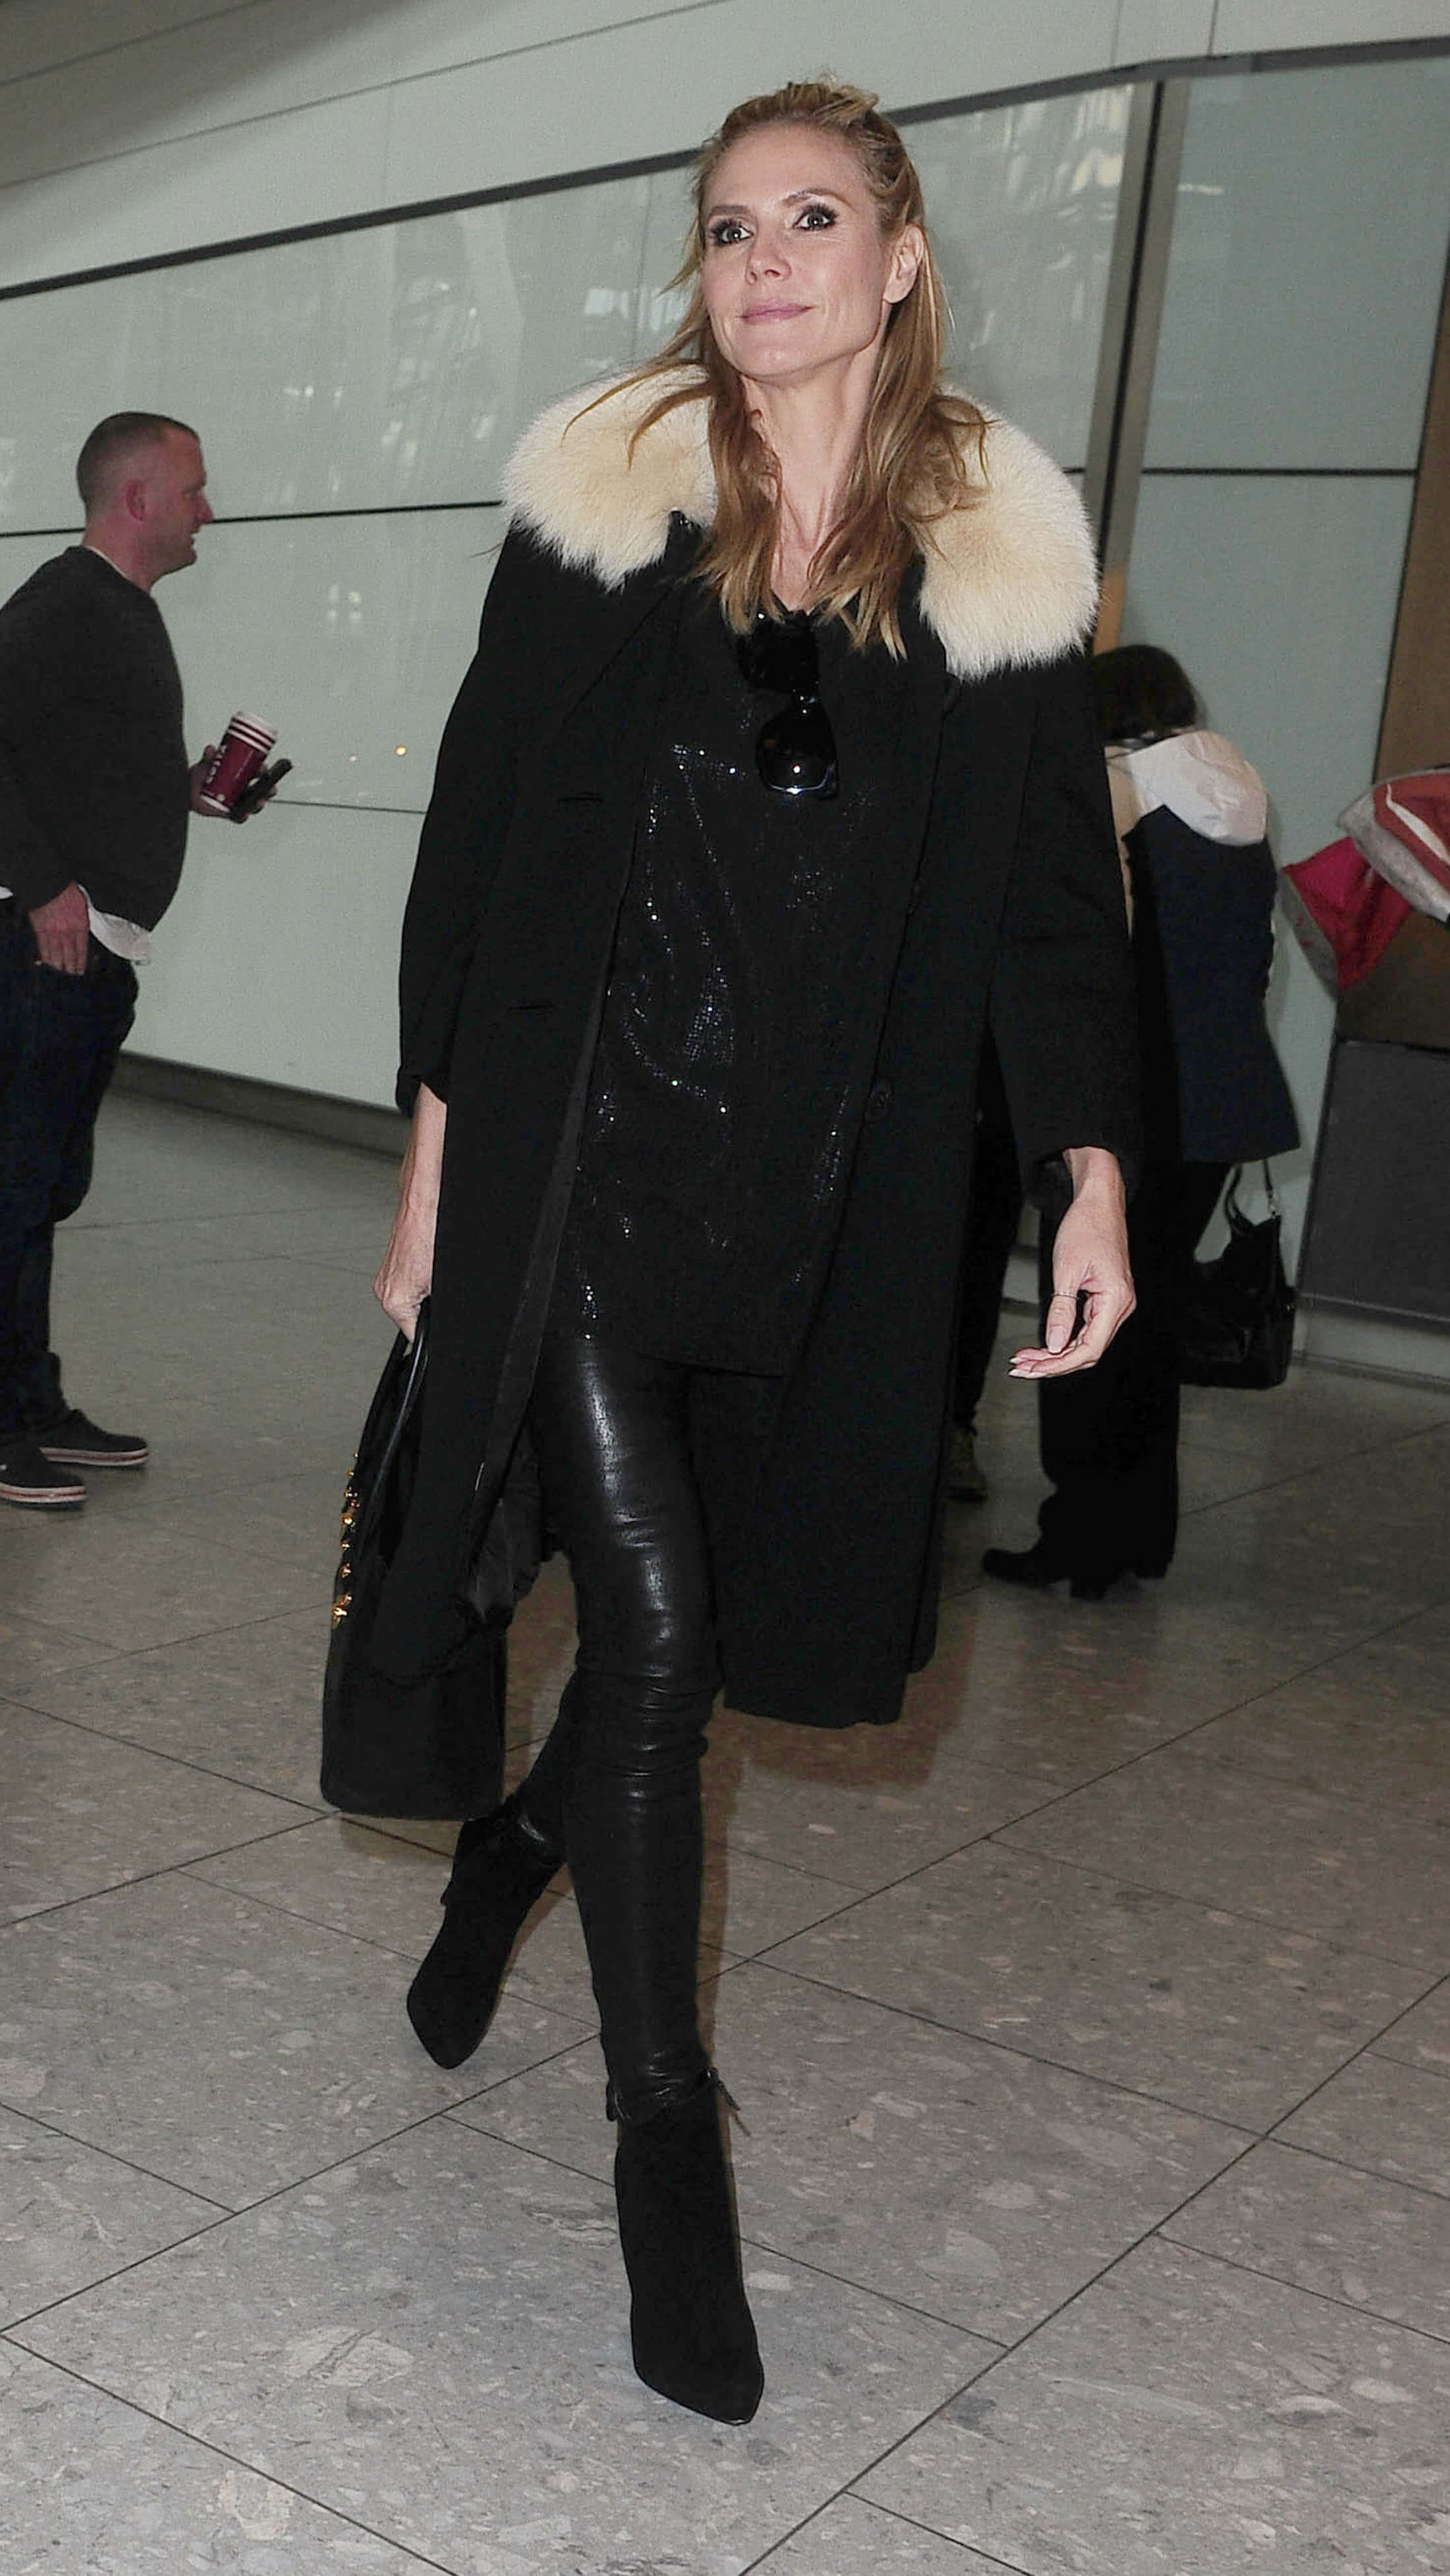 Heidi Klum at Heathrow airport